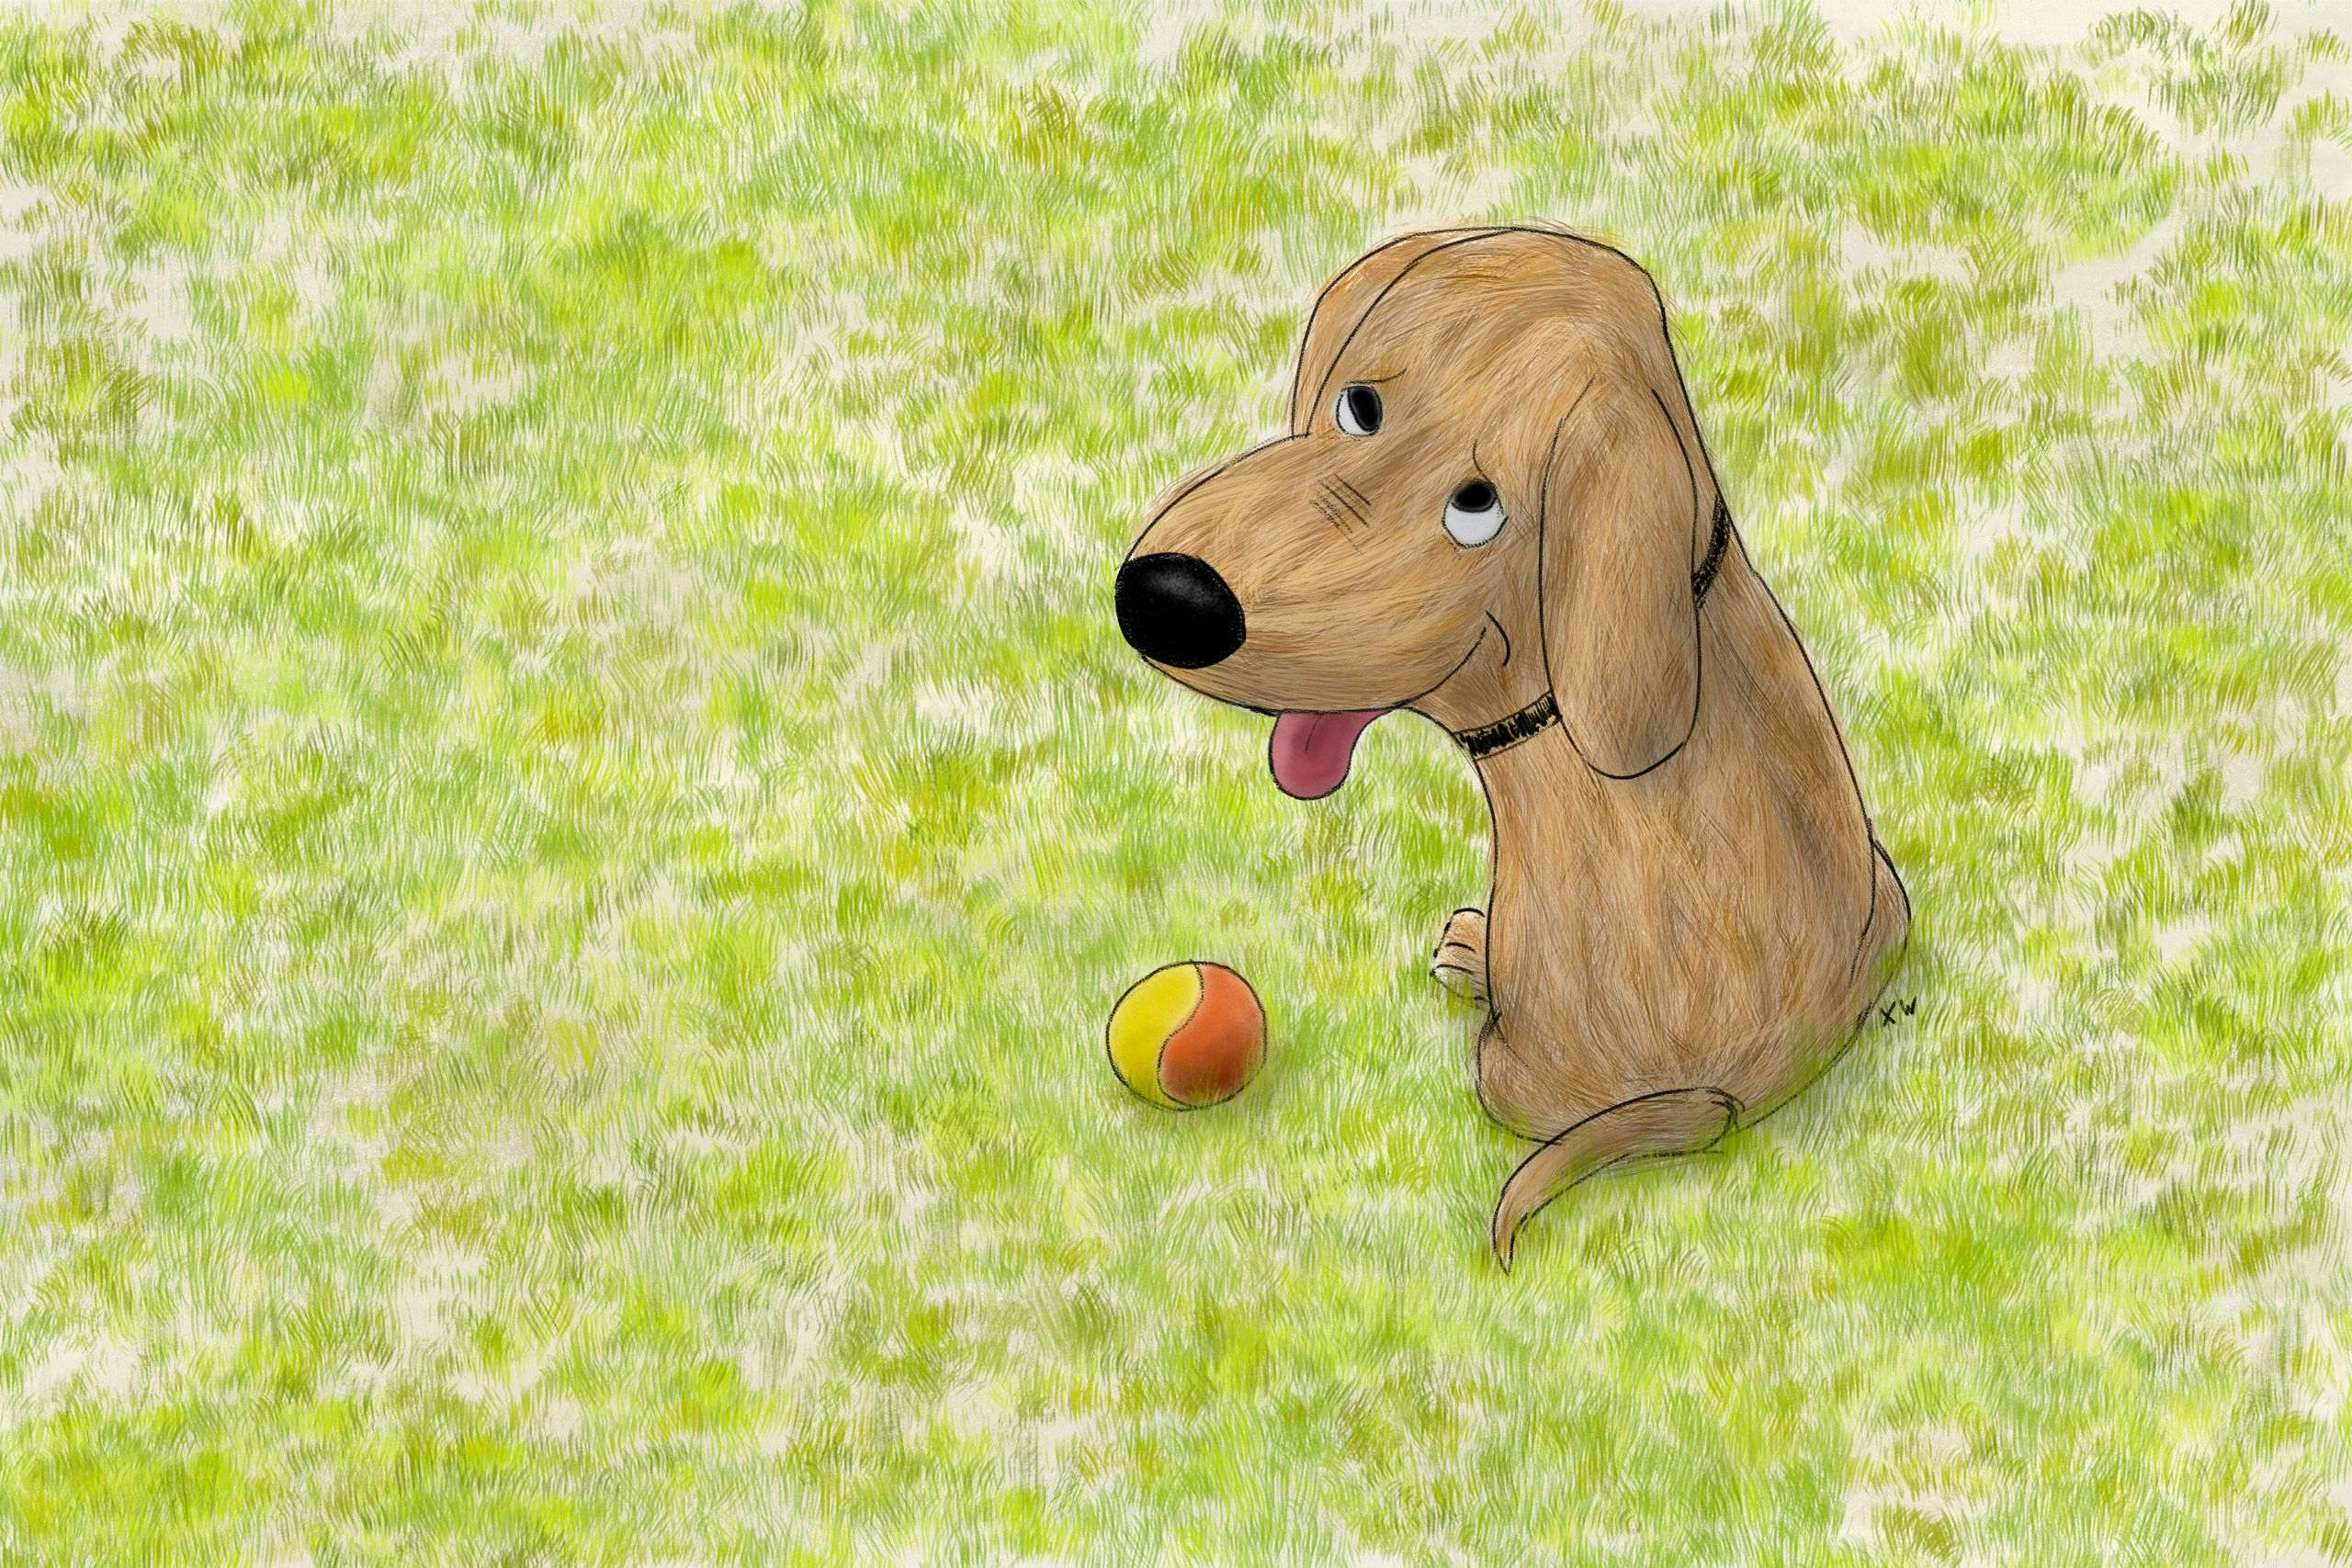 unny dog playing ball illustration. Digital art by Xavier Wendling.